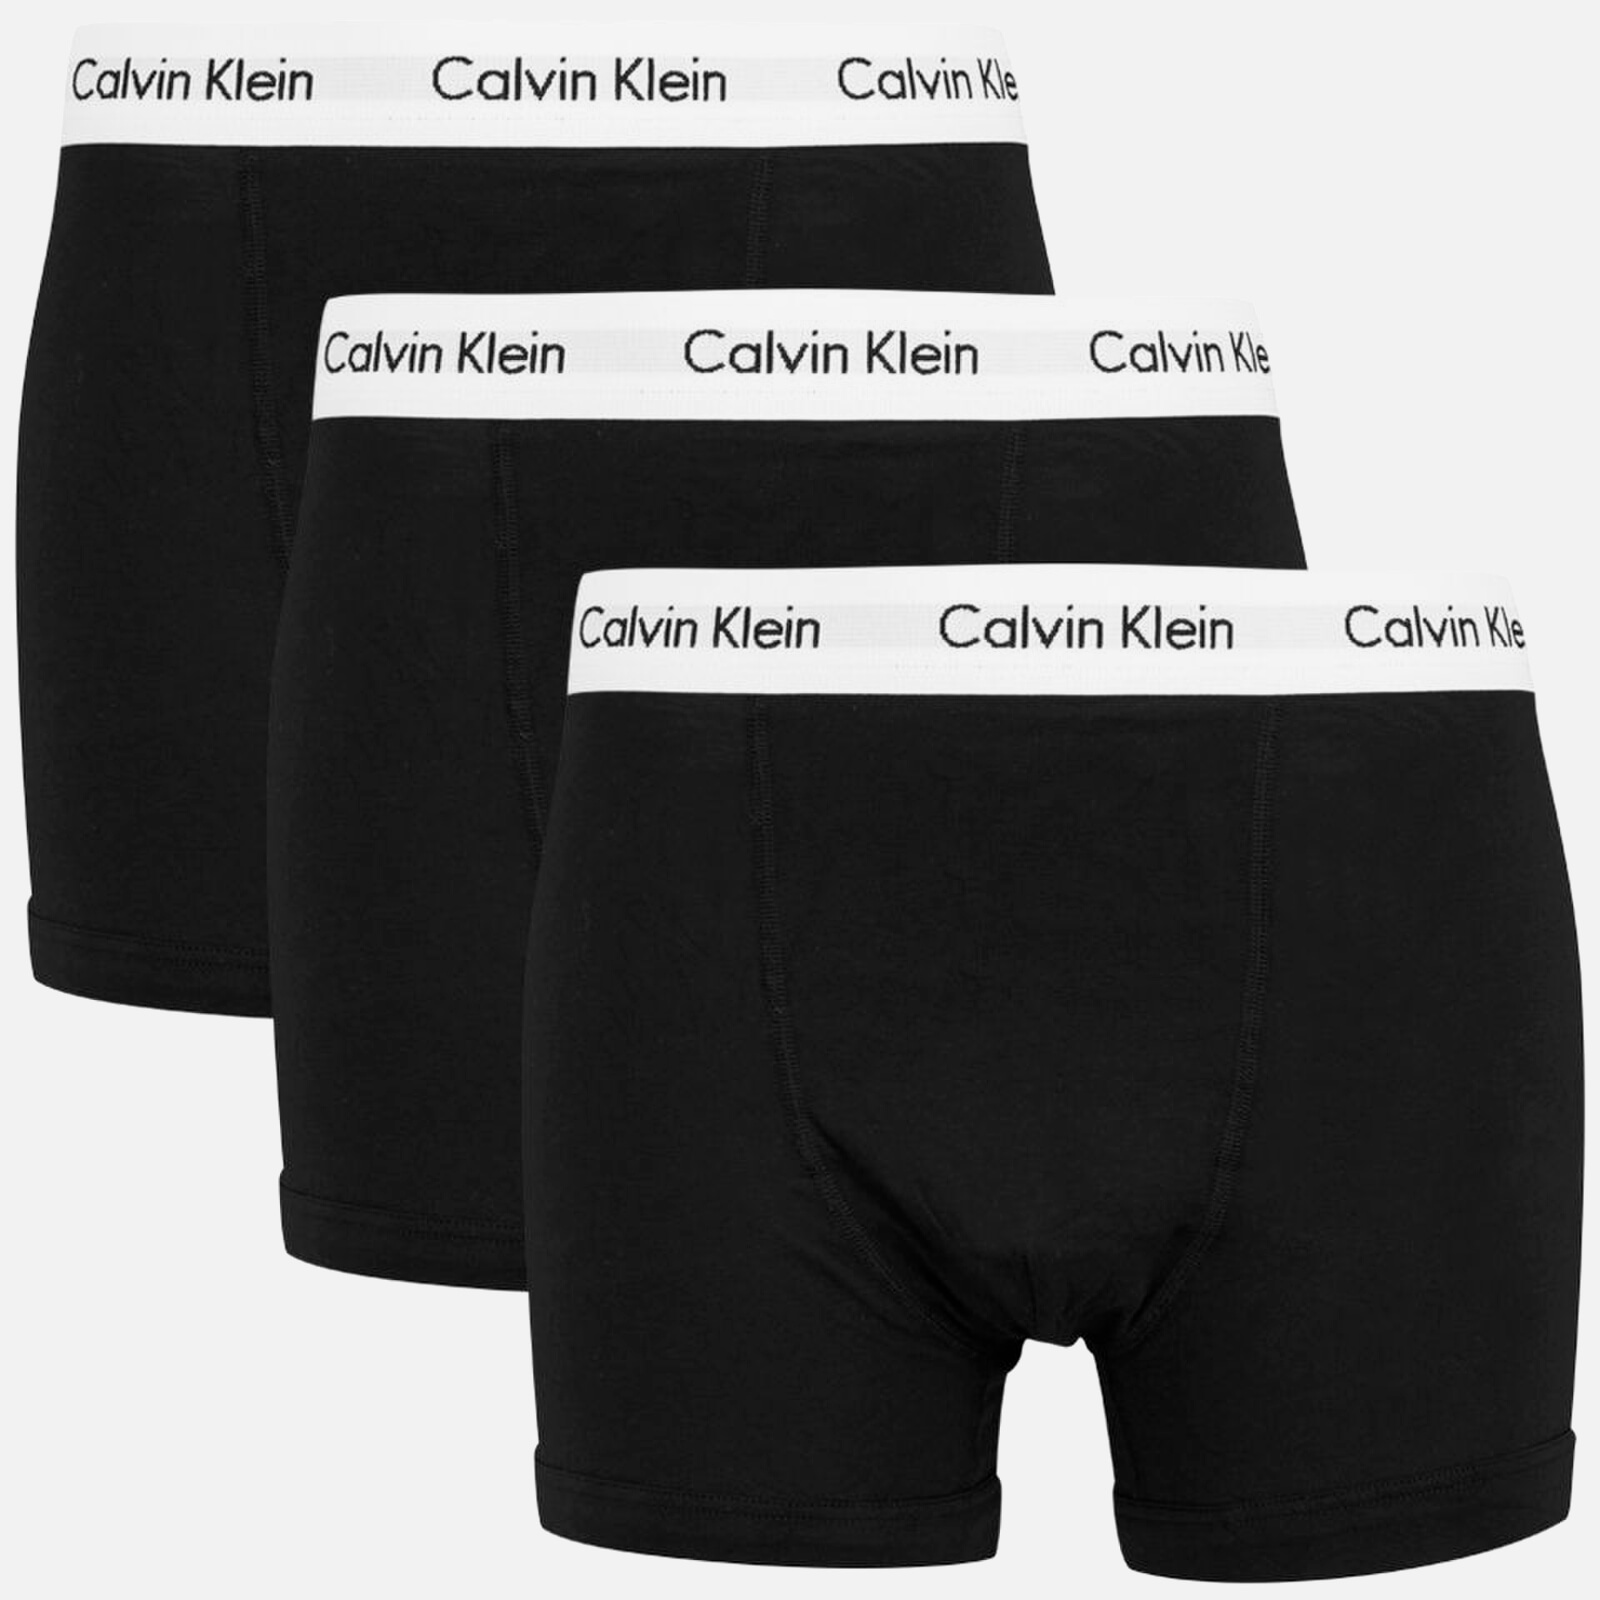 Calvin Klein Men's Cotton Stretch 3-Pack Trunks - Black - M